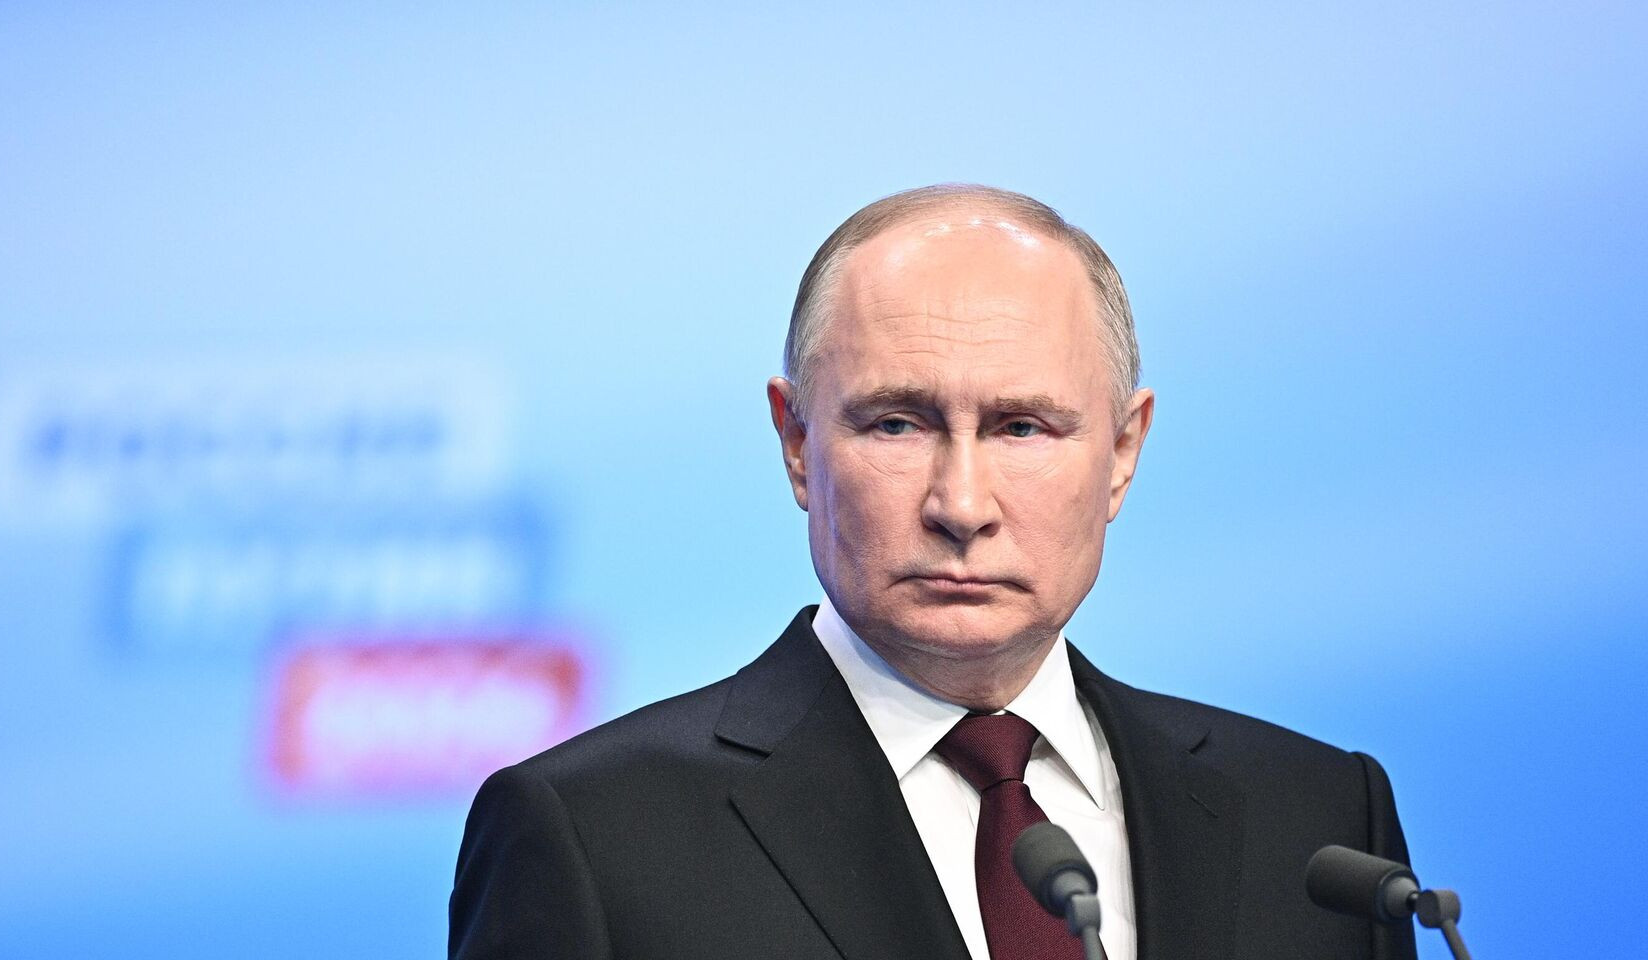 Putin to visit China in May, Reuters